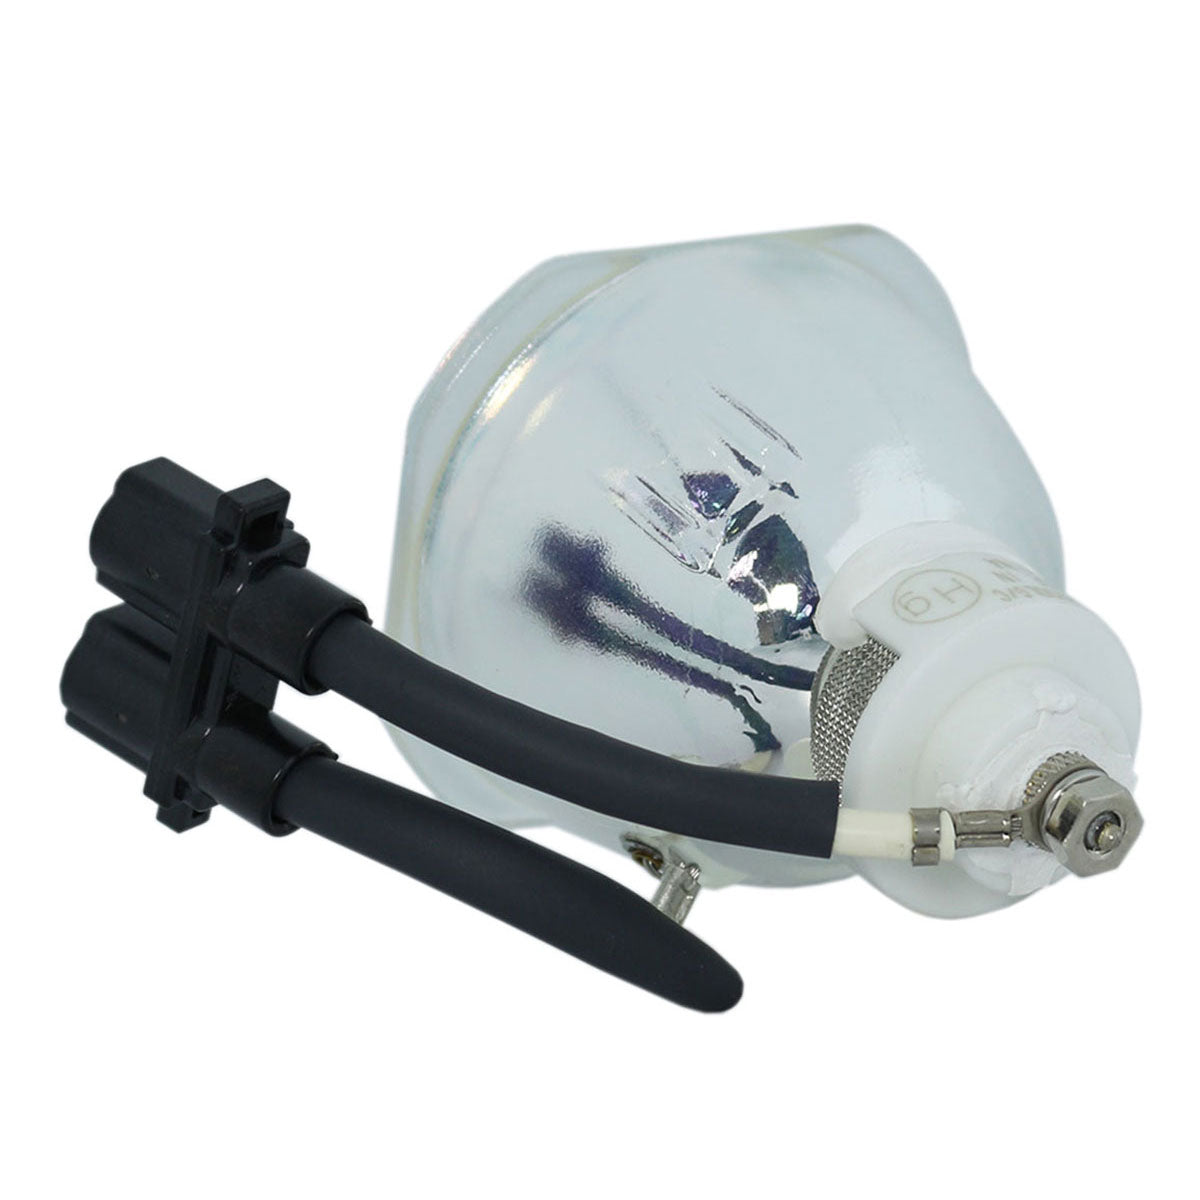 LG AJ-LT91 Ushio Projector Bare Lamp